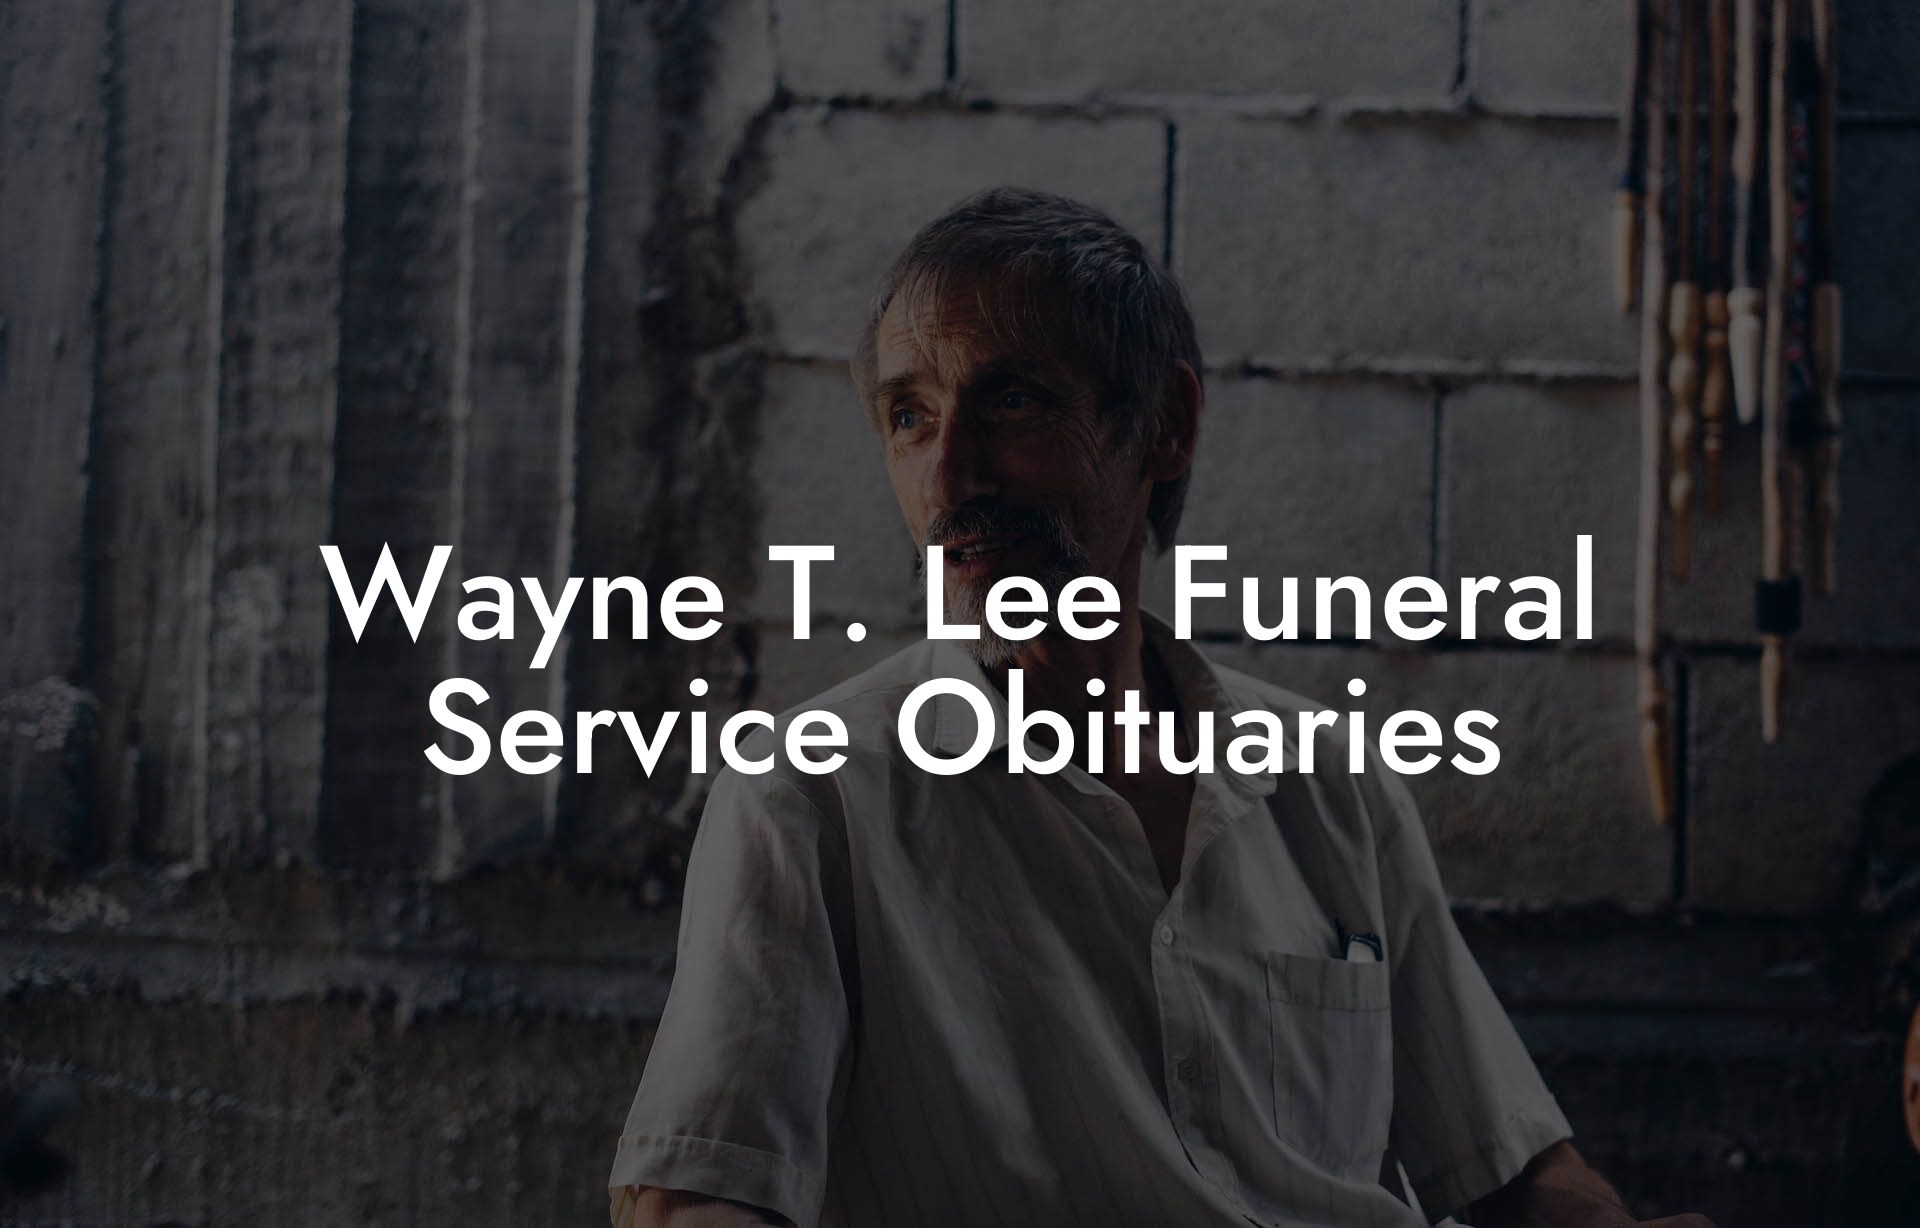 Wayne T. Lee Funeral Service Obituaries